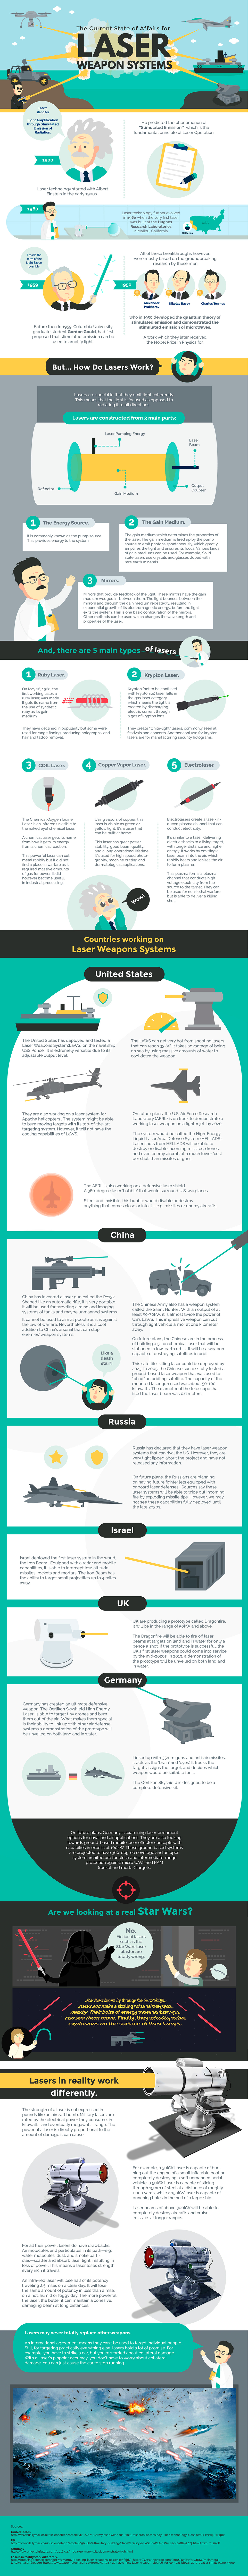 infographic laser Starwars system Weapon